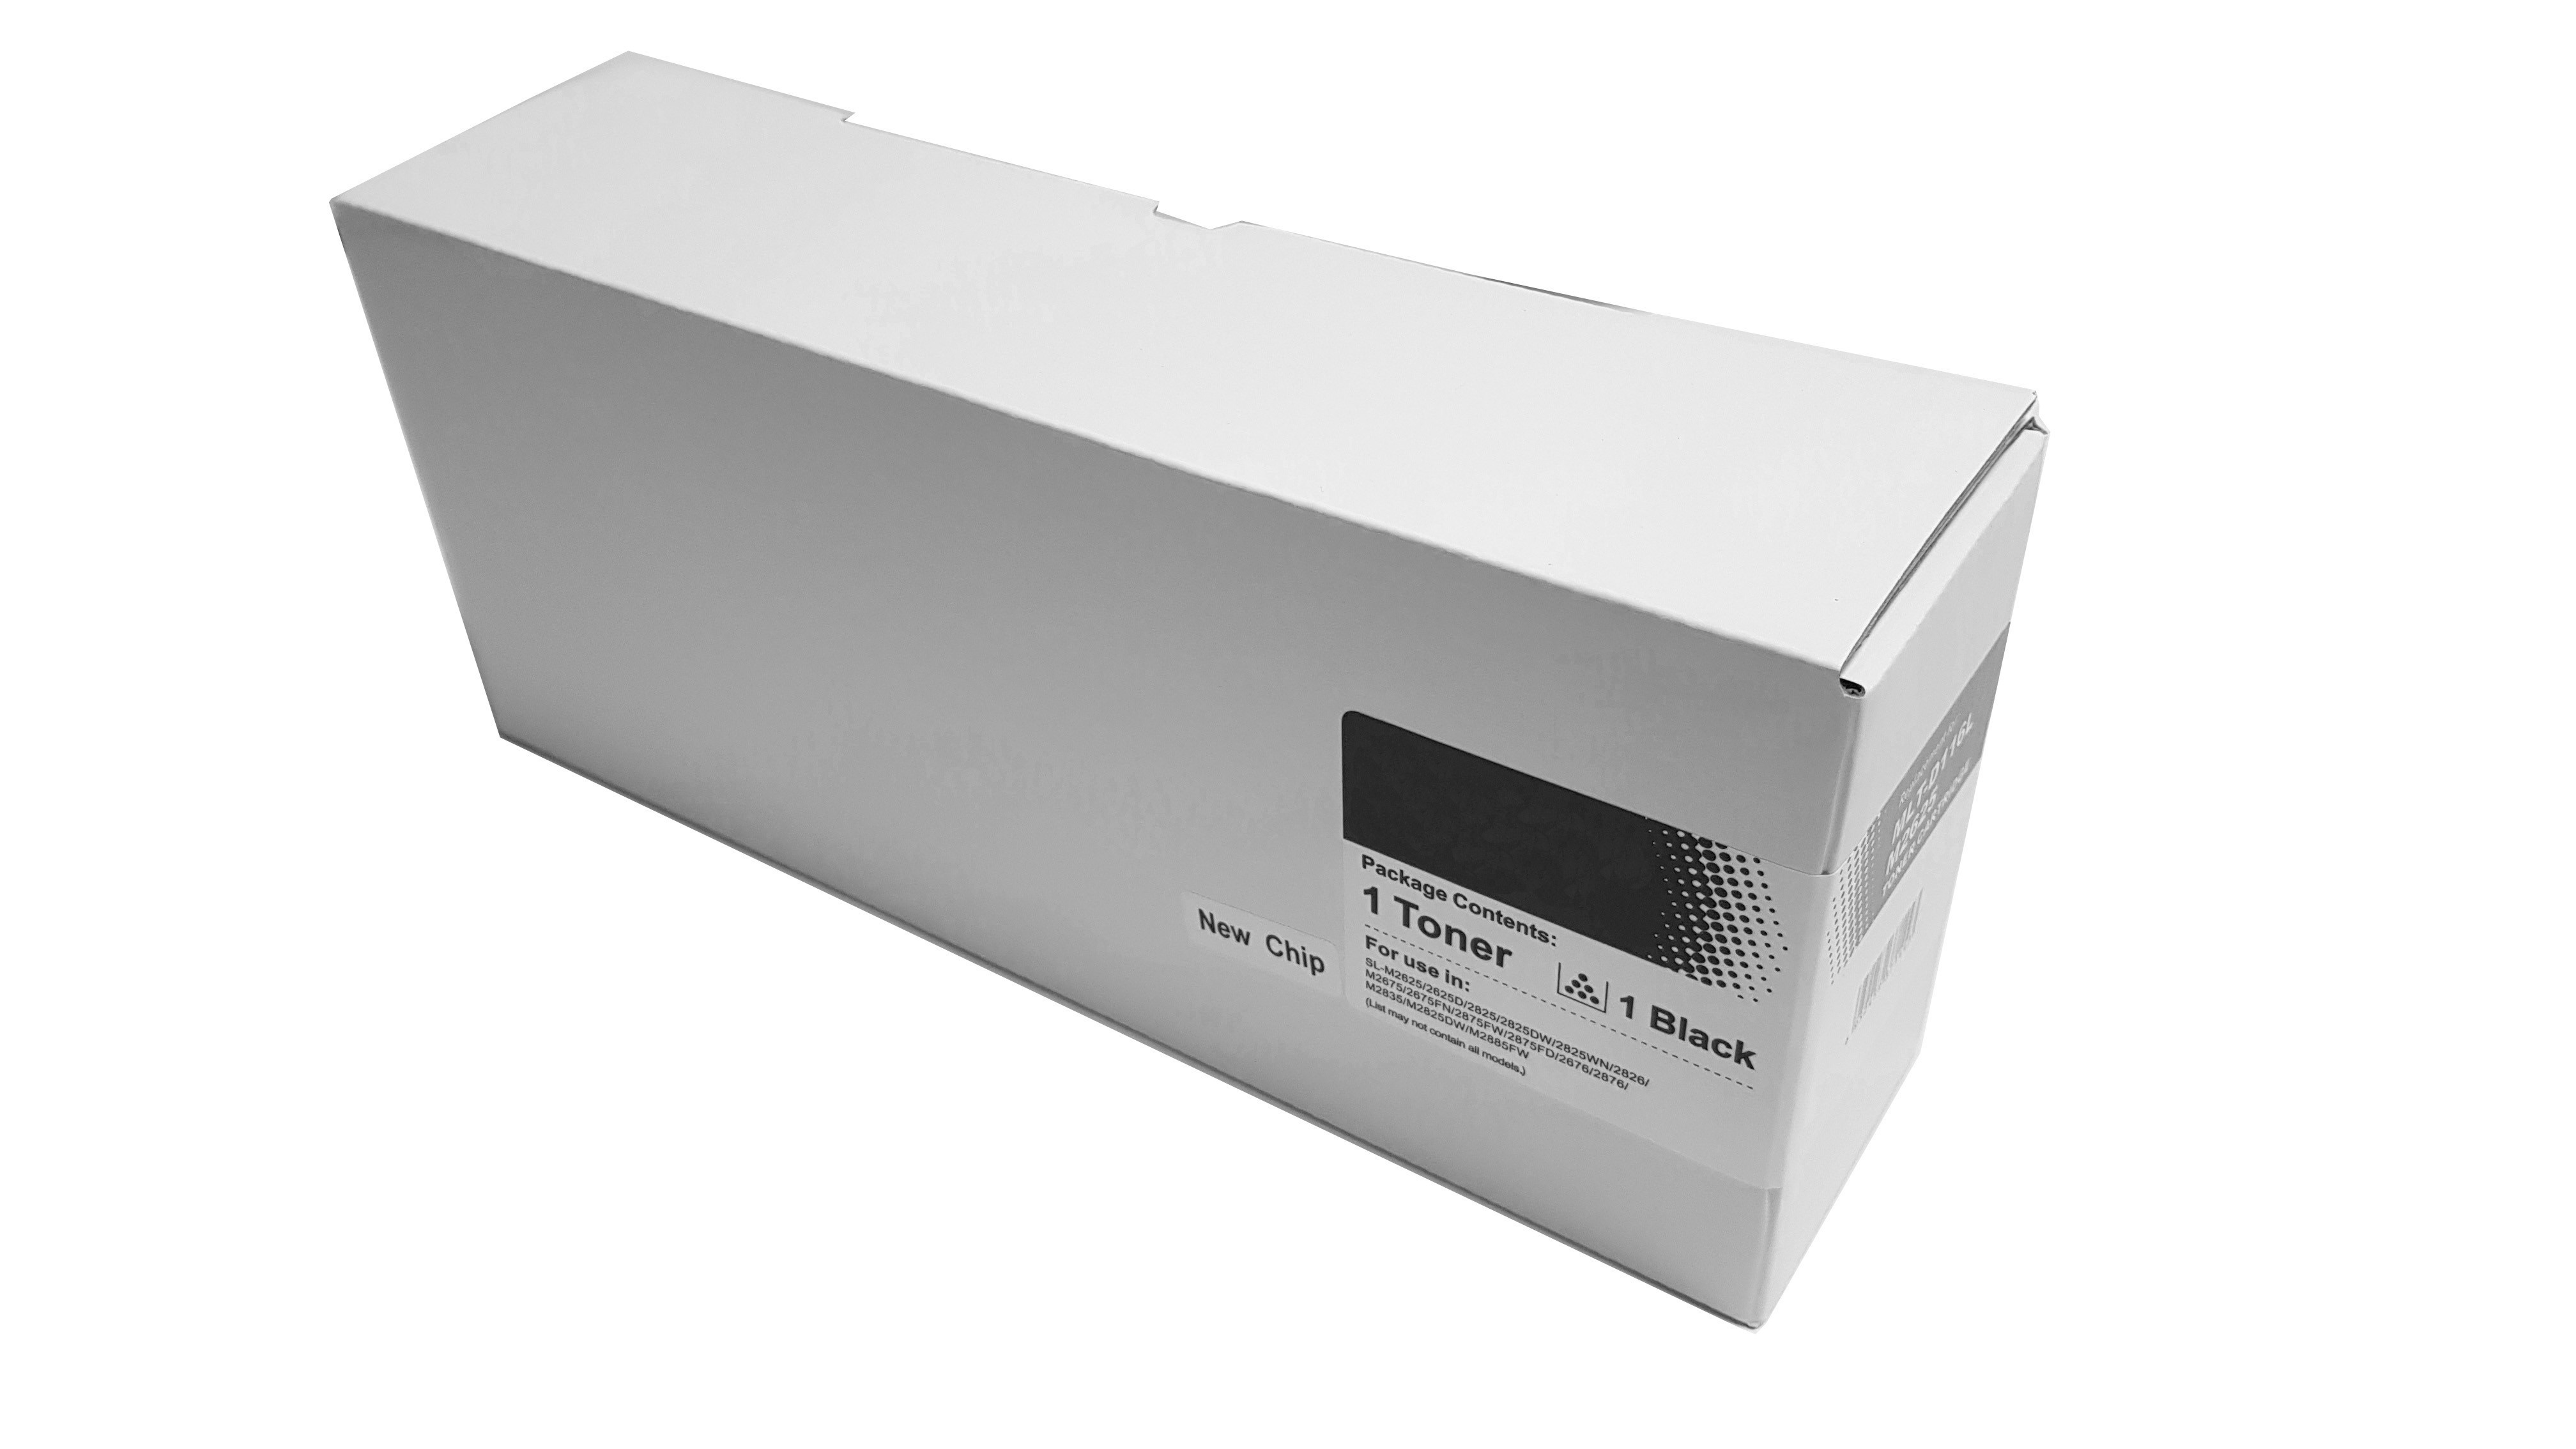 XEROX 3315/3325 Toner 5K  WHITE BOX (For use)